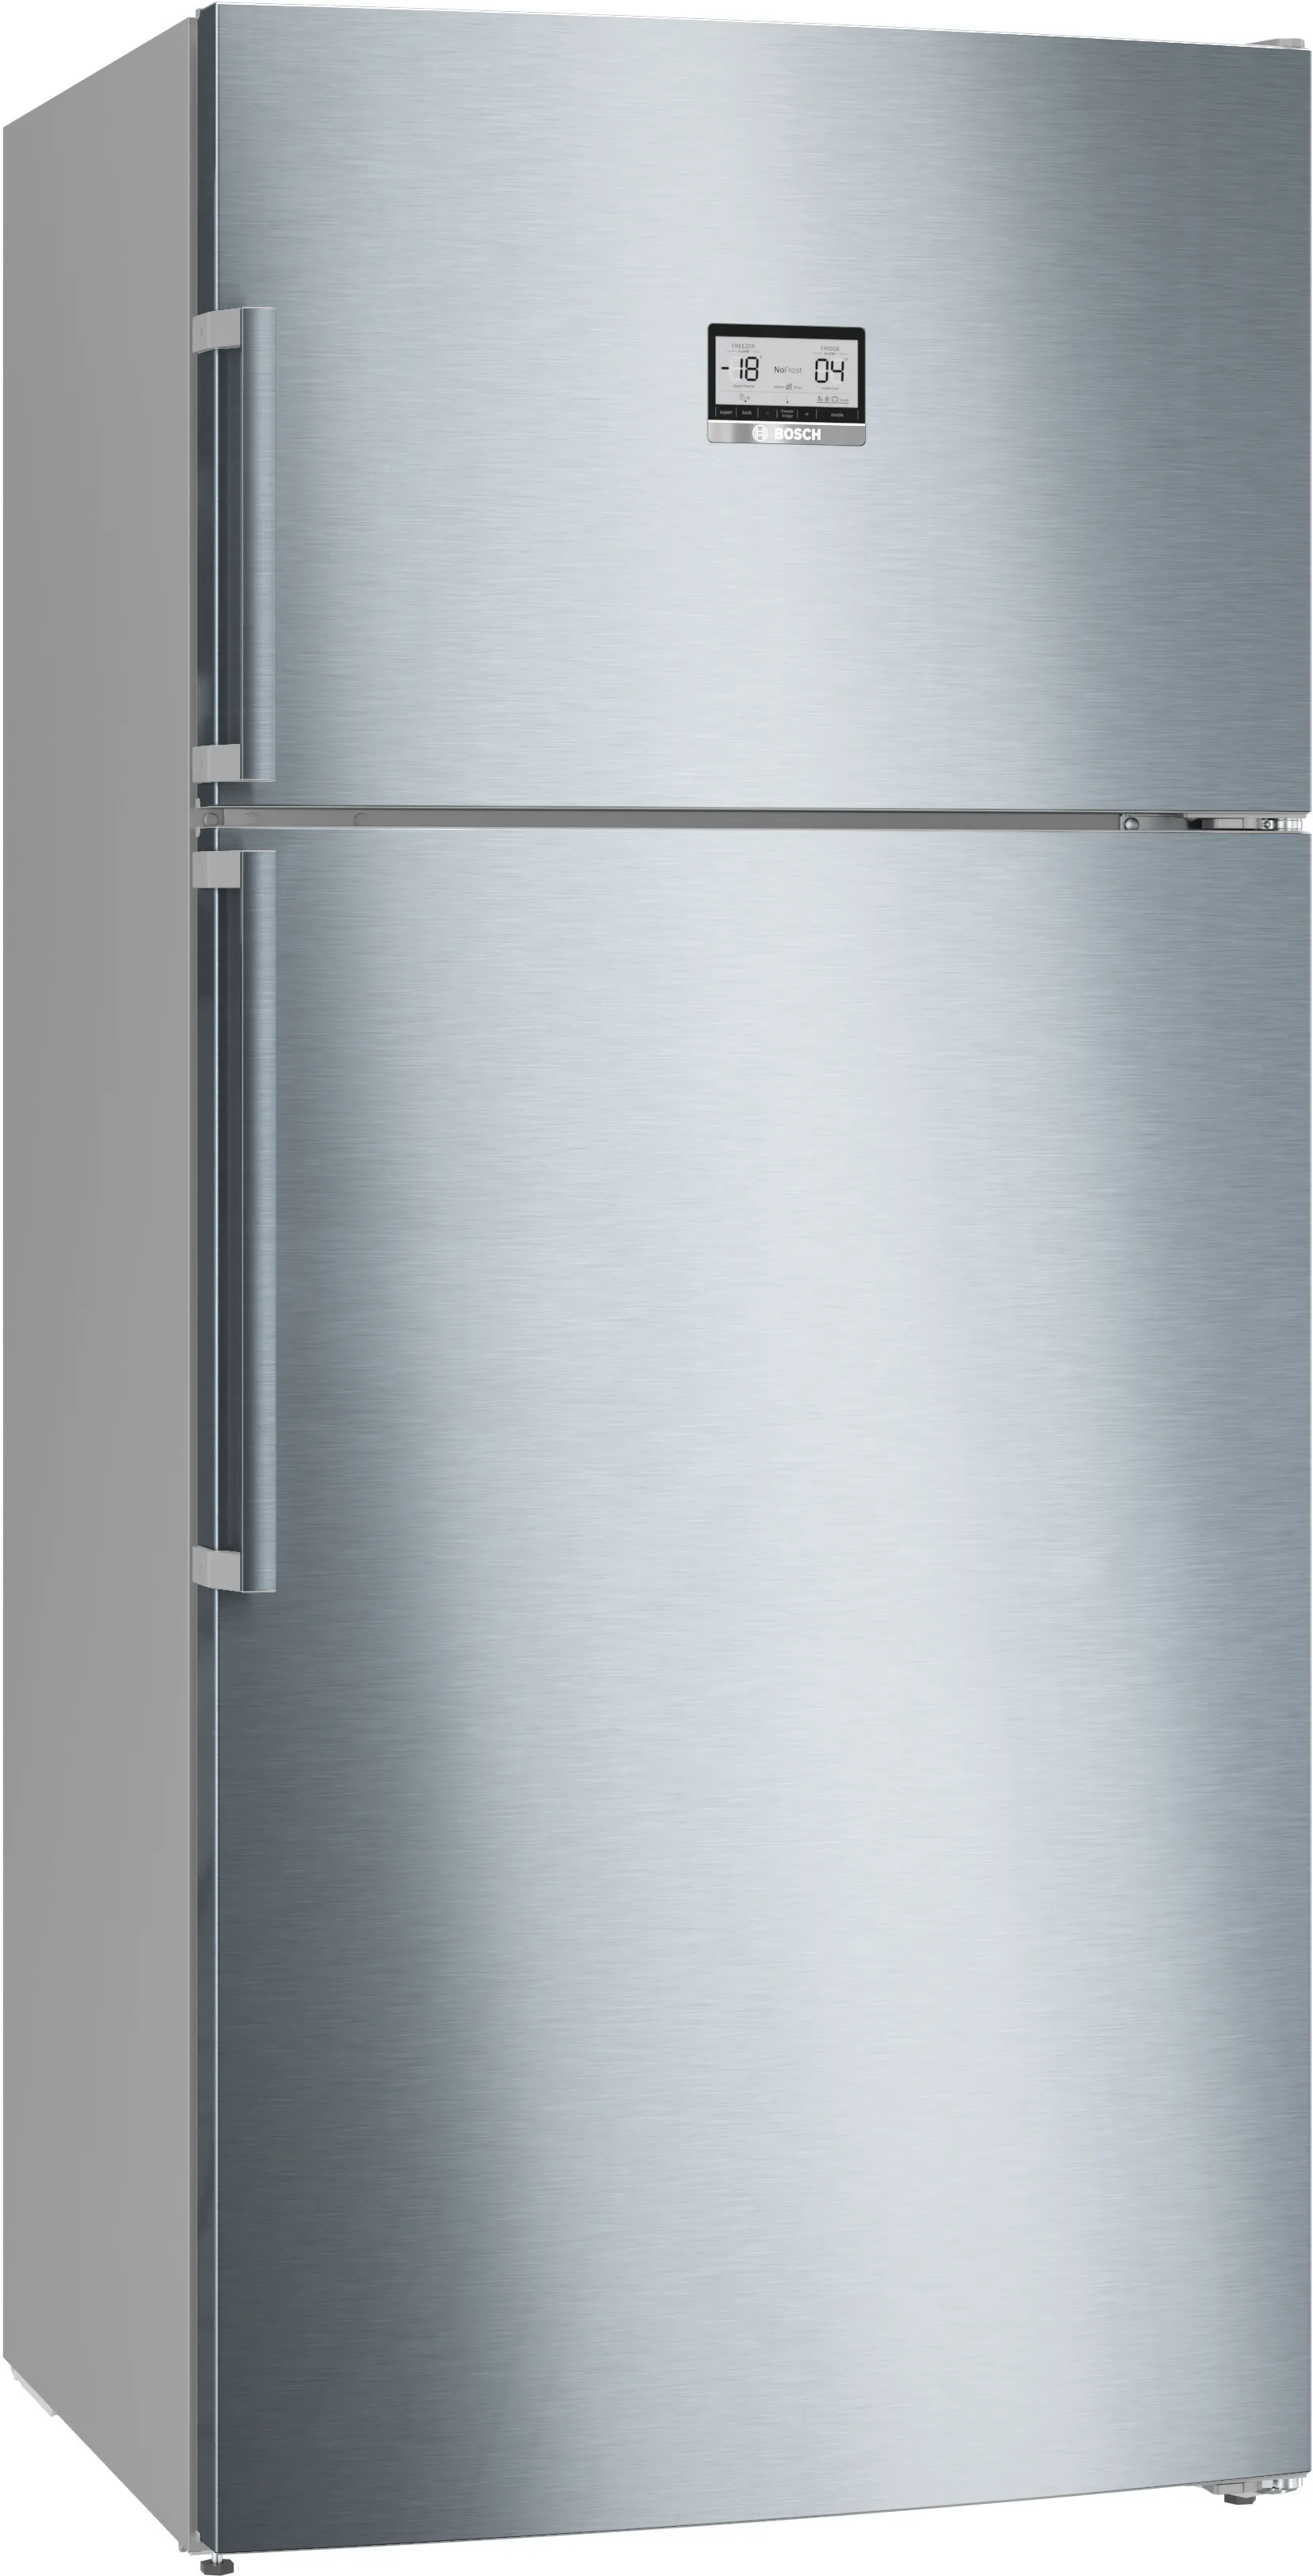 Series 6 Free-standing fridge-freezer with freezer at top 186 x 86 cm Brushed steel anti-fingerprint 